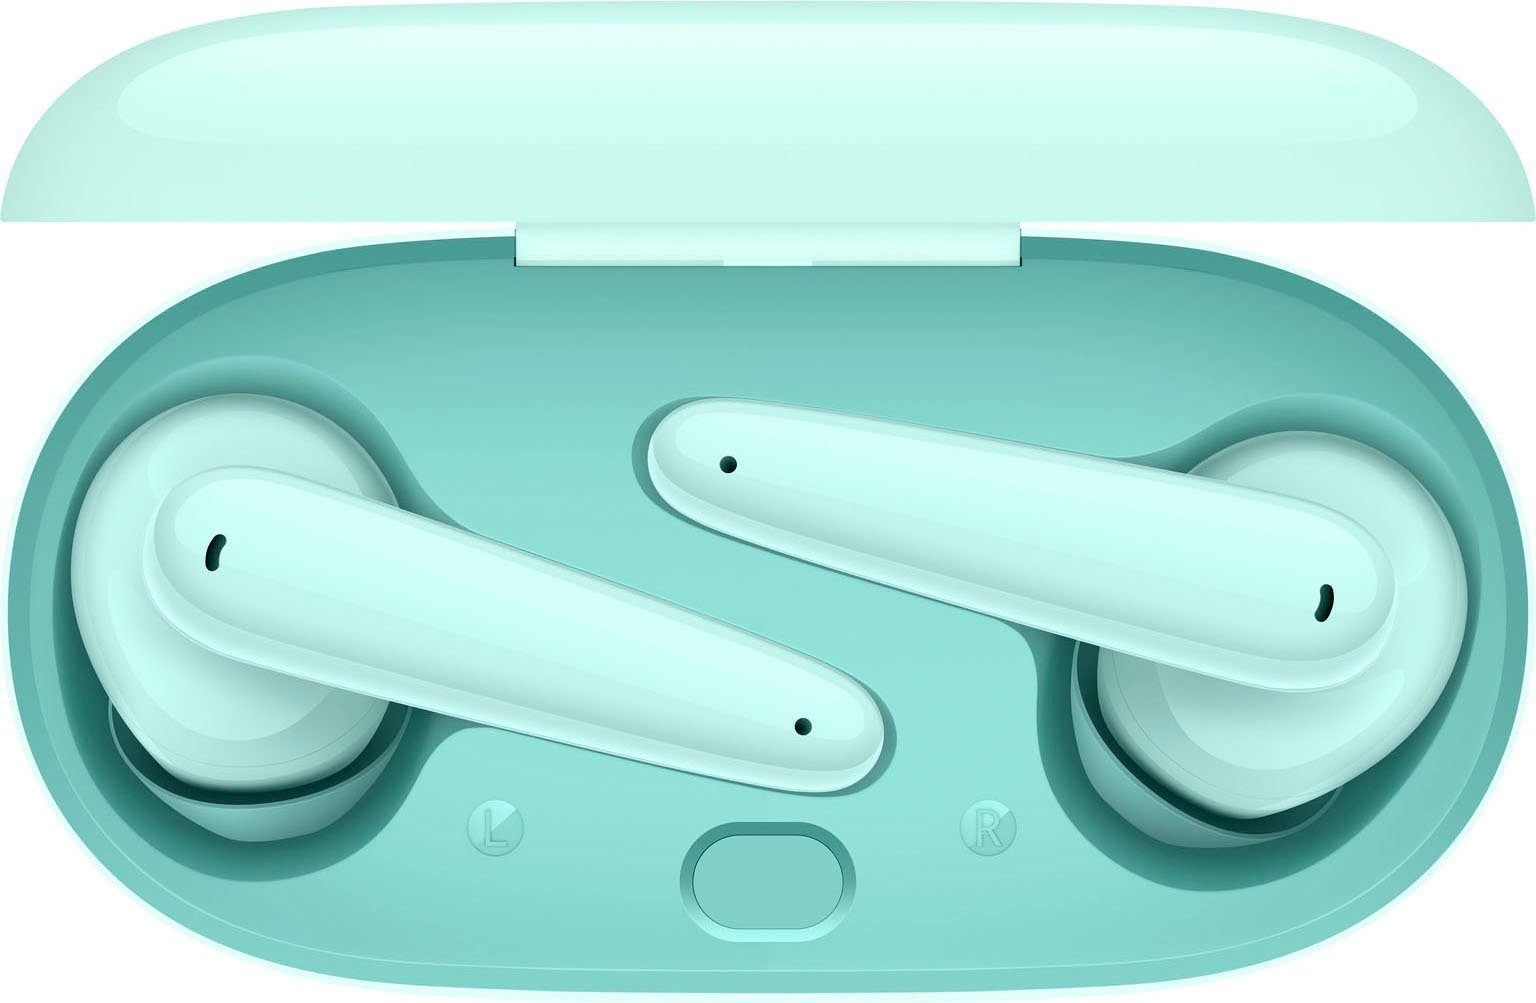 Sound, Lange SE Huawei (Premium-Design, Akkulaufzeit) Kristallklarer wireless Blau In-Ear-Kopfhörer FreeBuds